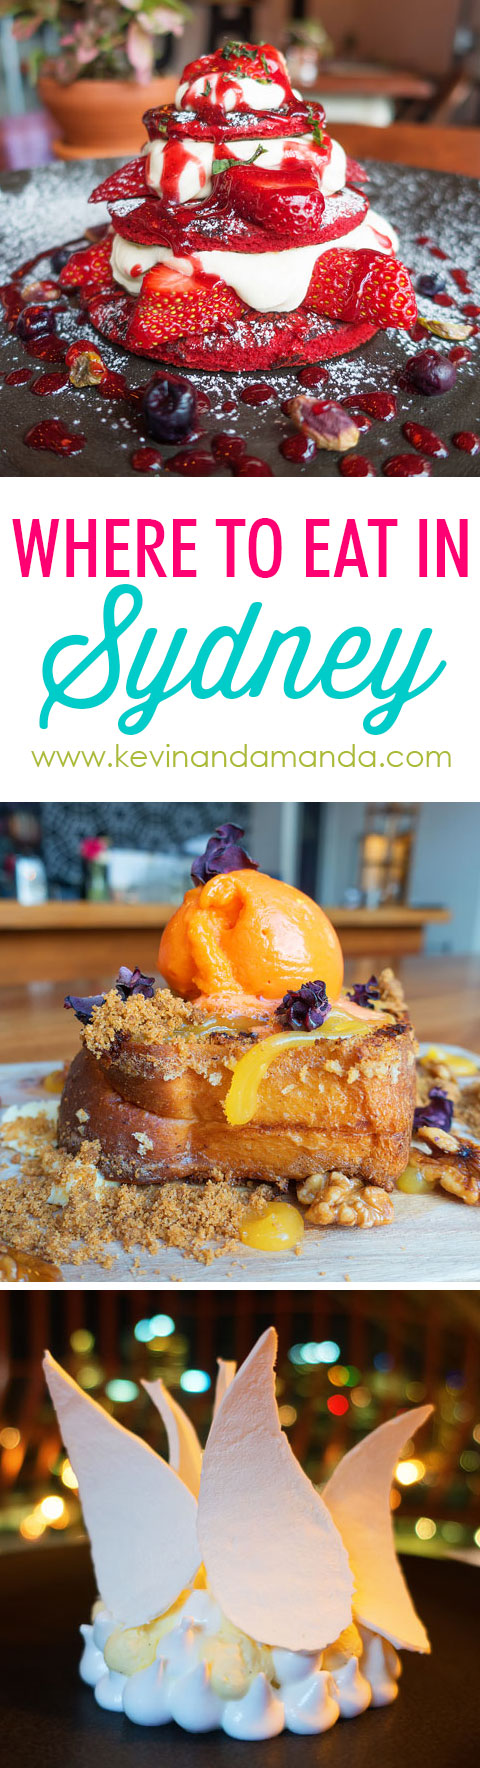 Best Sydney Restaurants - Australian Food Guide